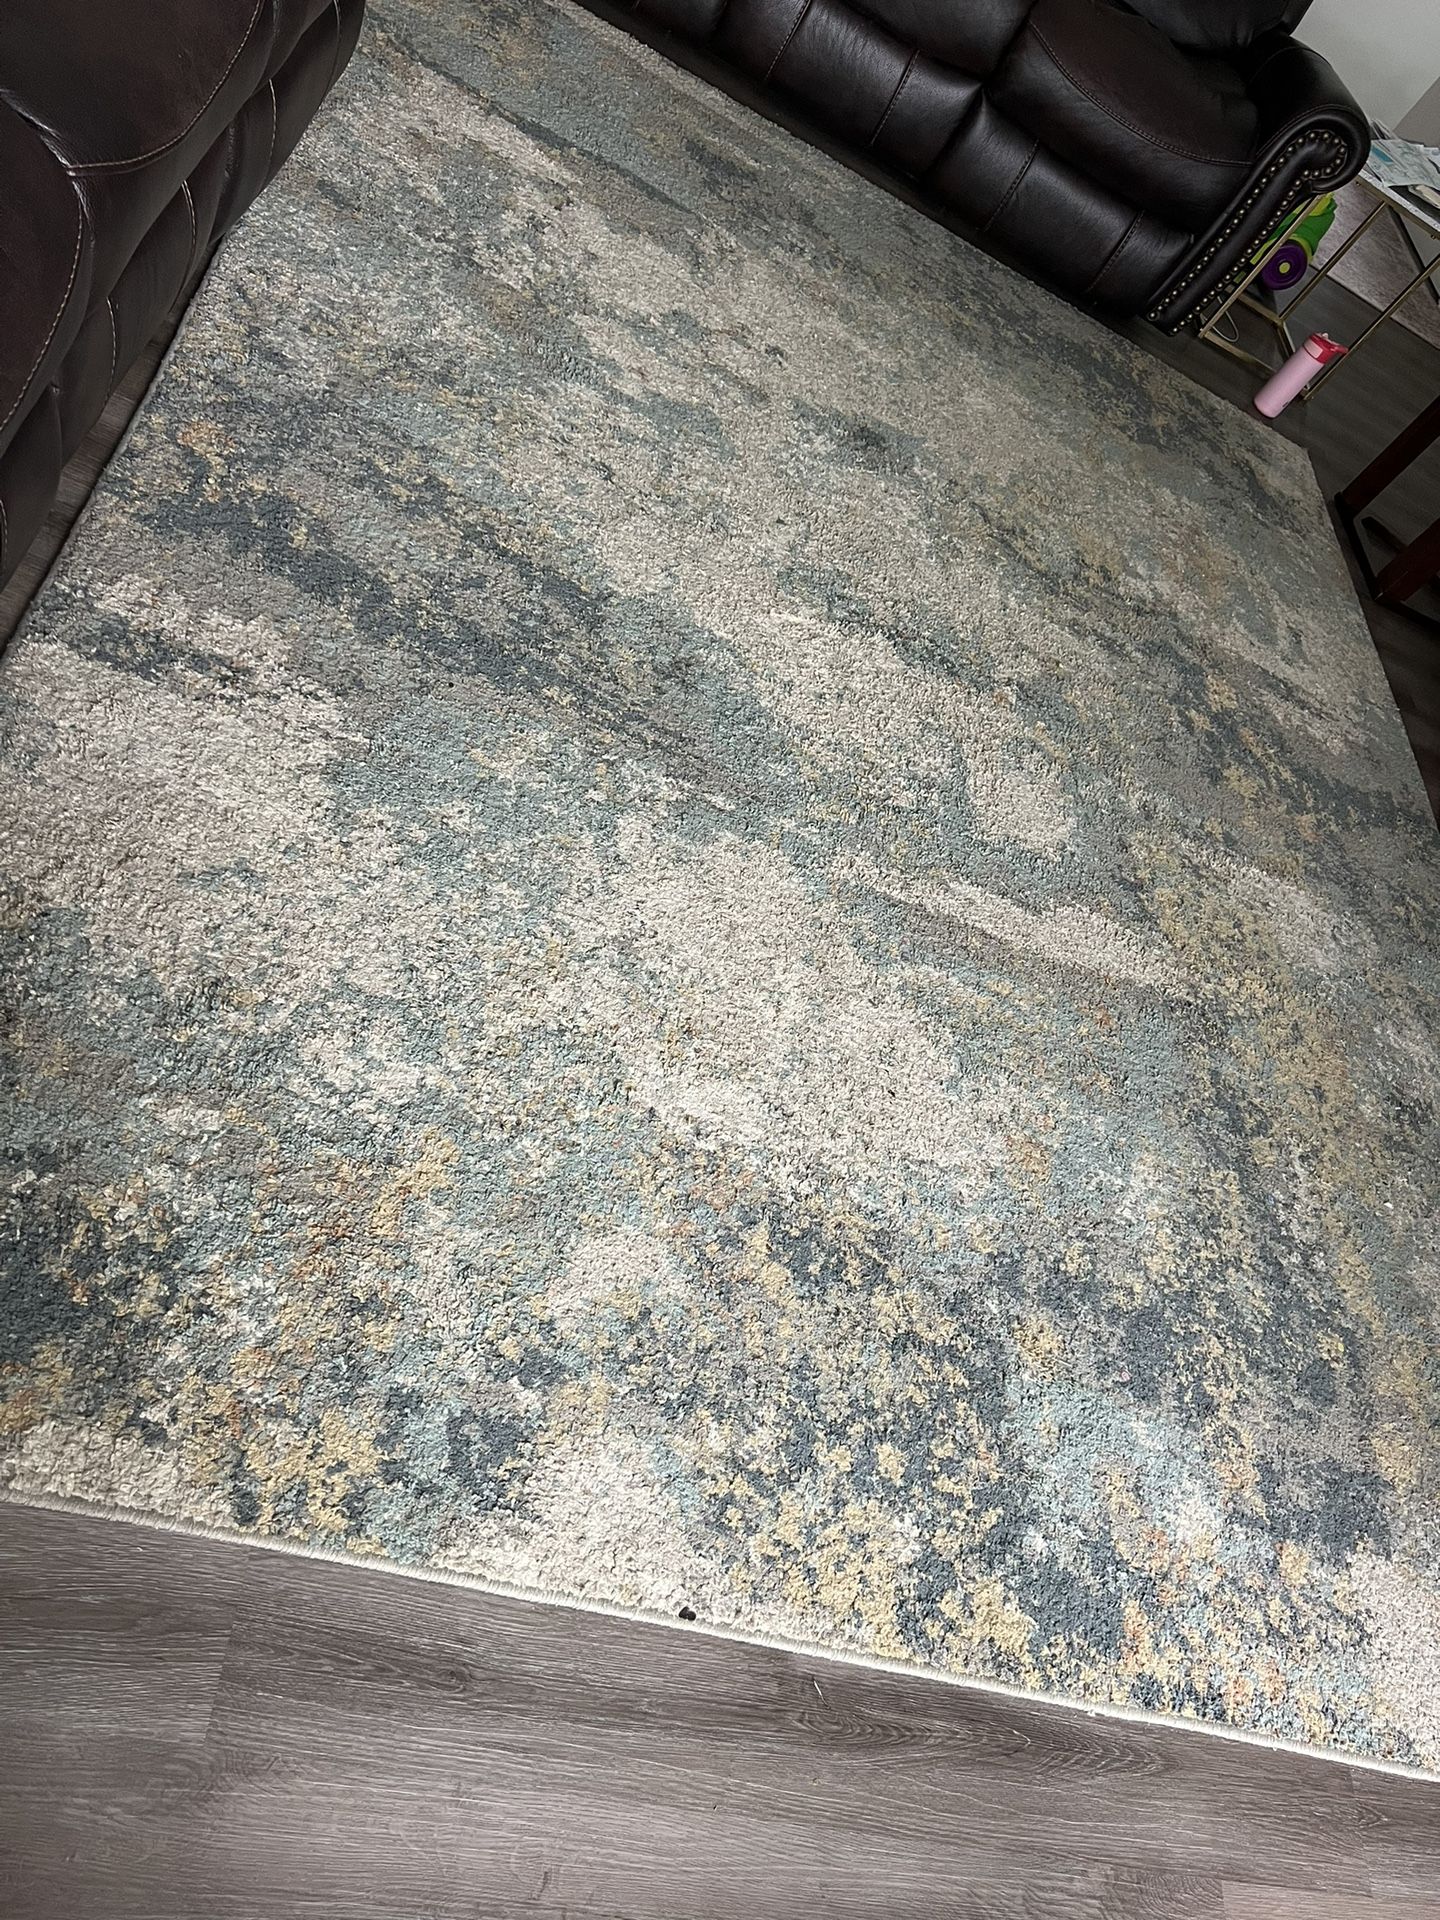 Home Depot Large Carpet 